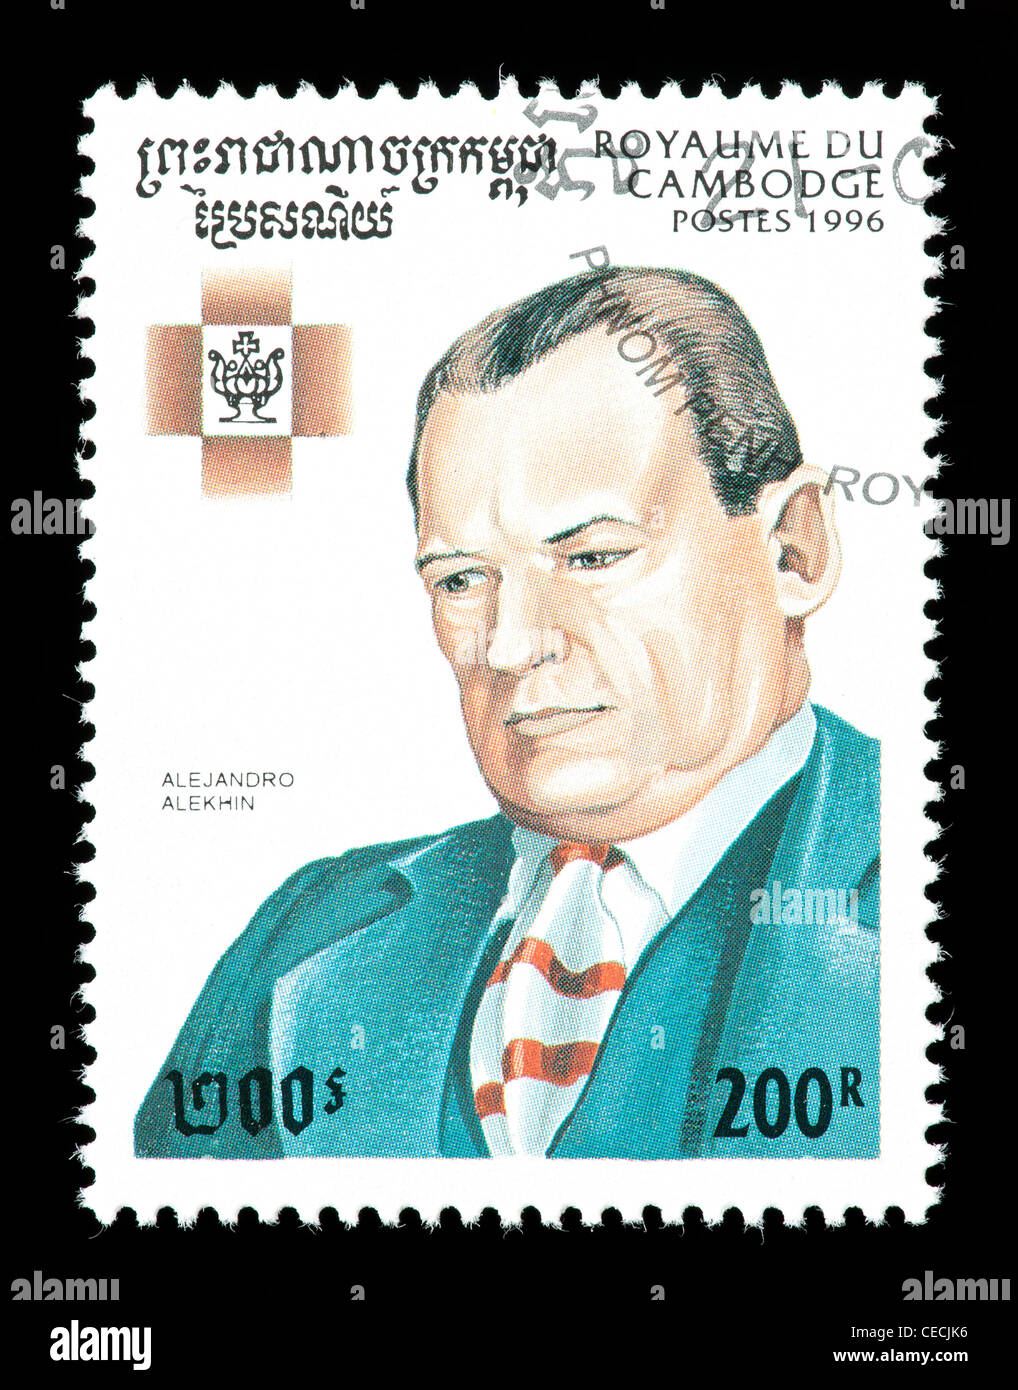 Postage stamp from Cambodi depicting Alexander Alekhine, former world chess champion. Stock Photo